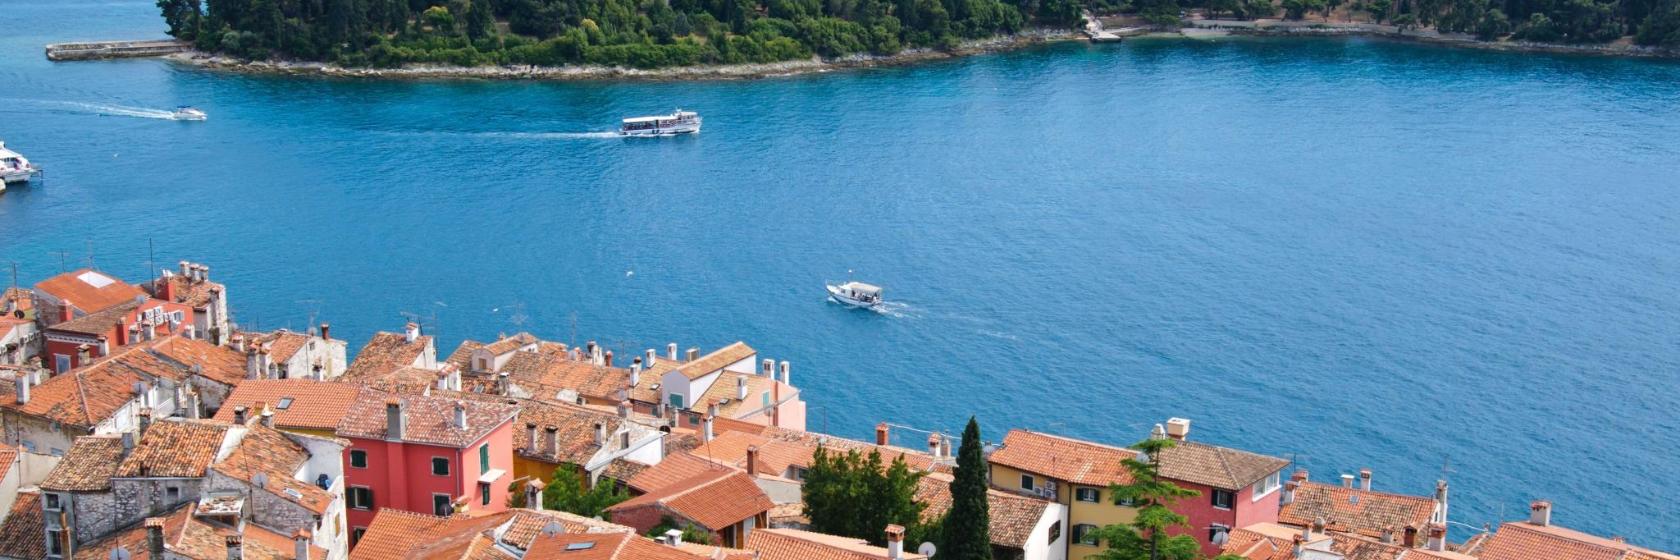 58829 hotels in Dalmatia, Croatia.